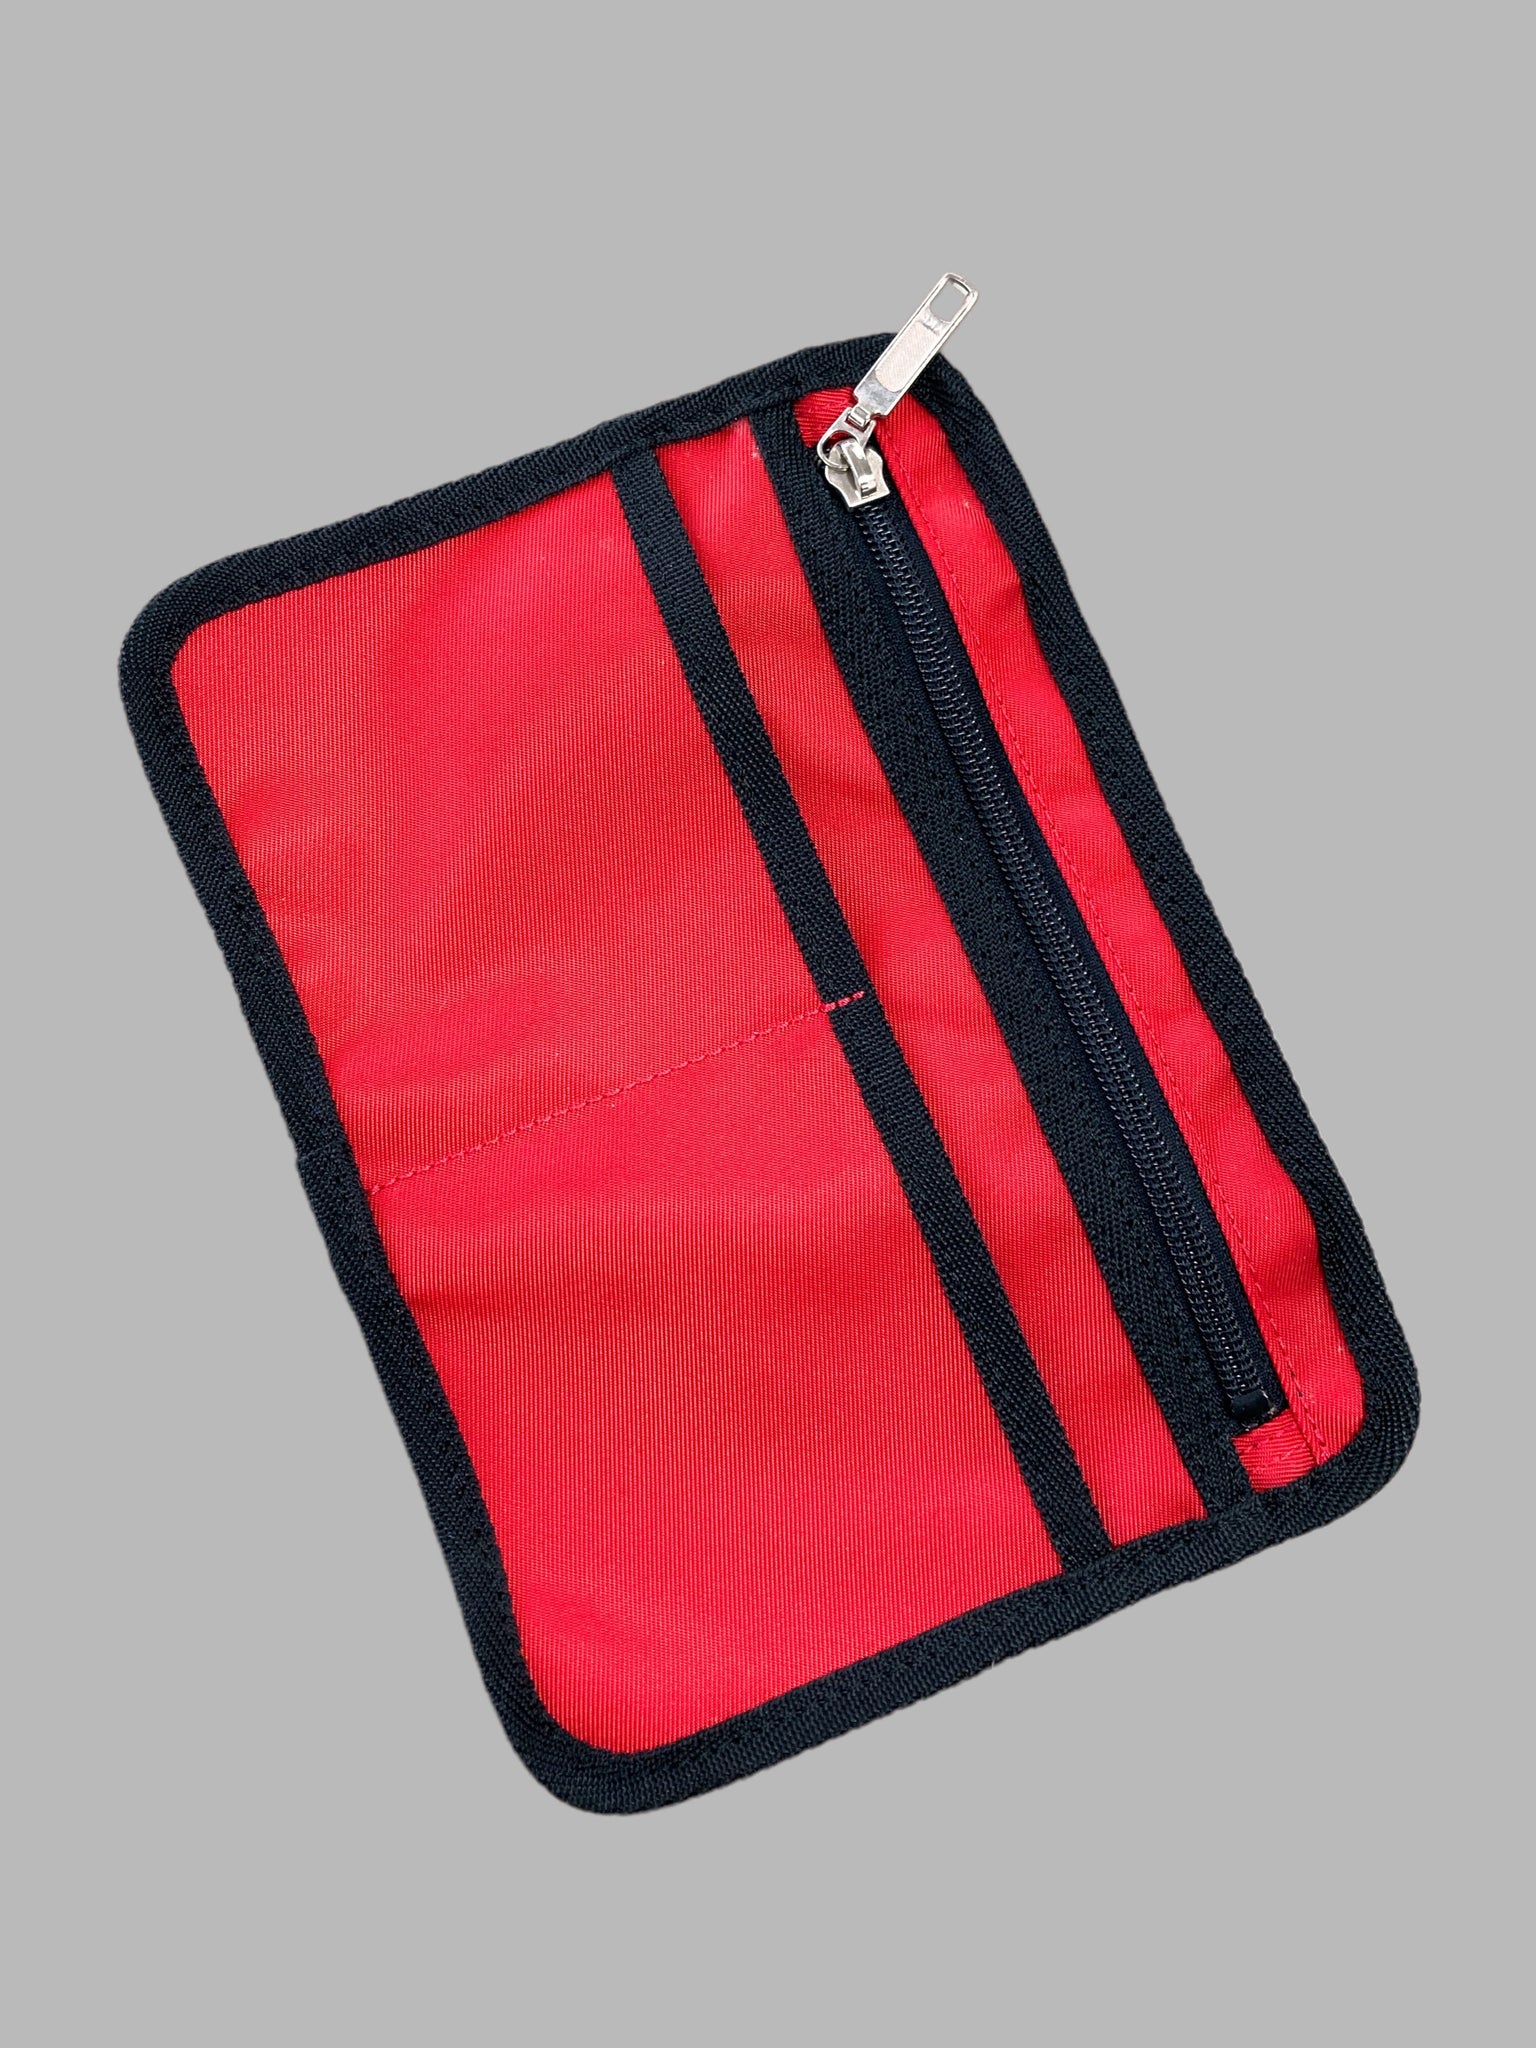 Yoichi Nagasawa 1990s red nylon mesh backpack waist bag